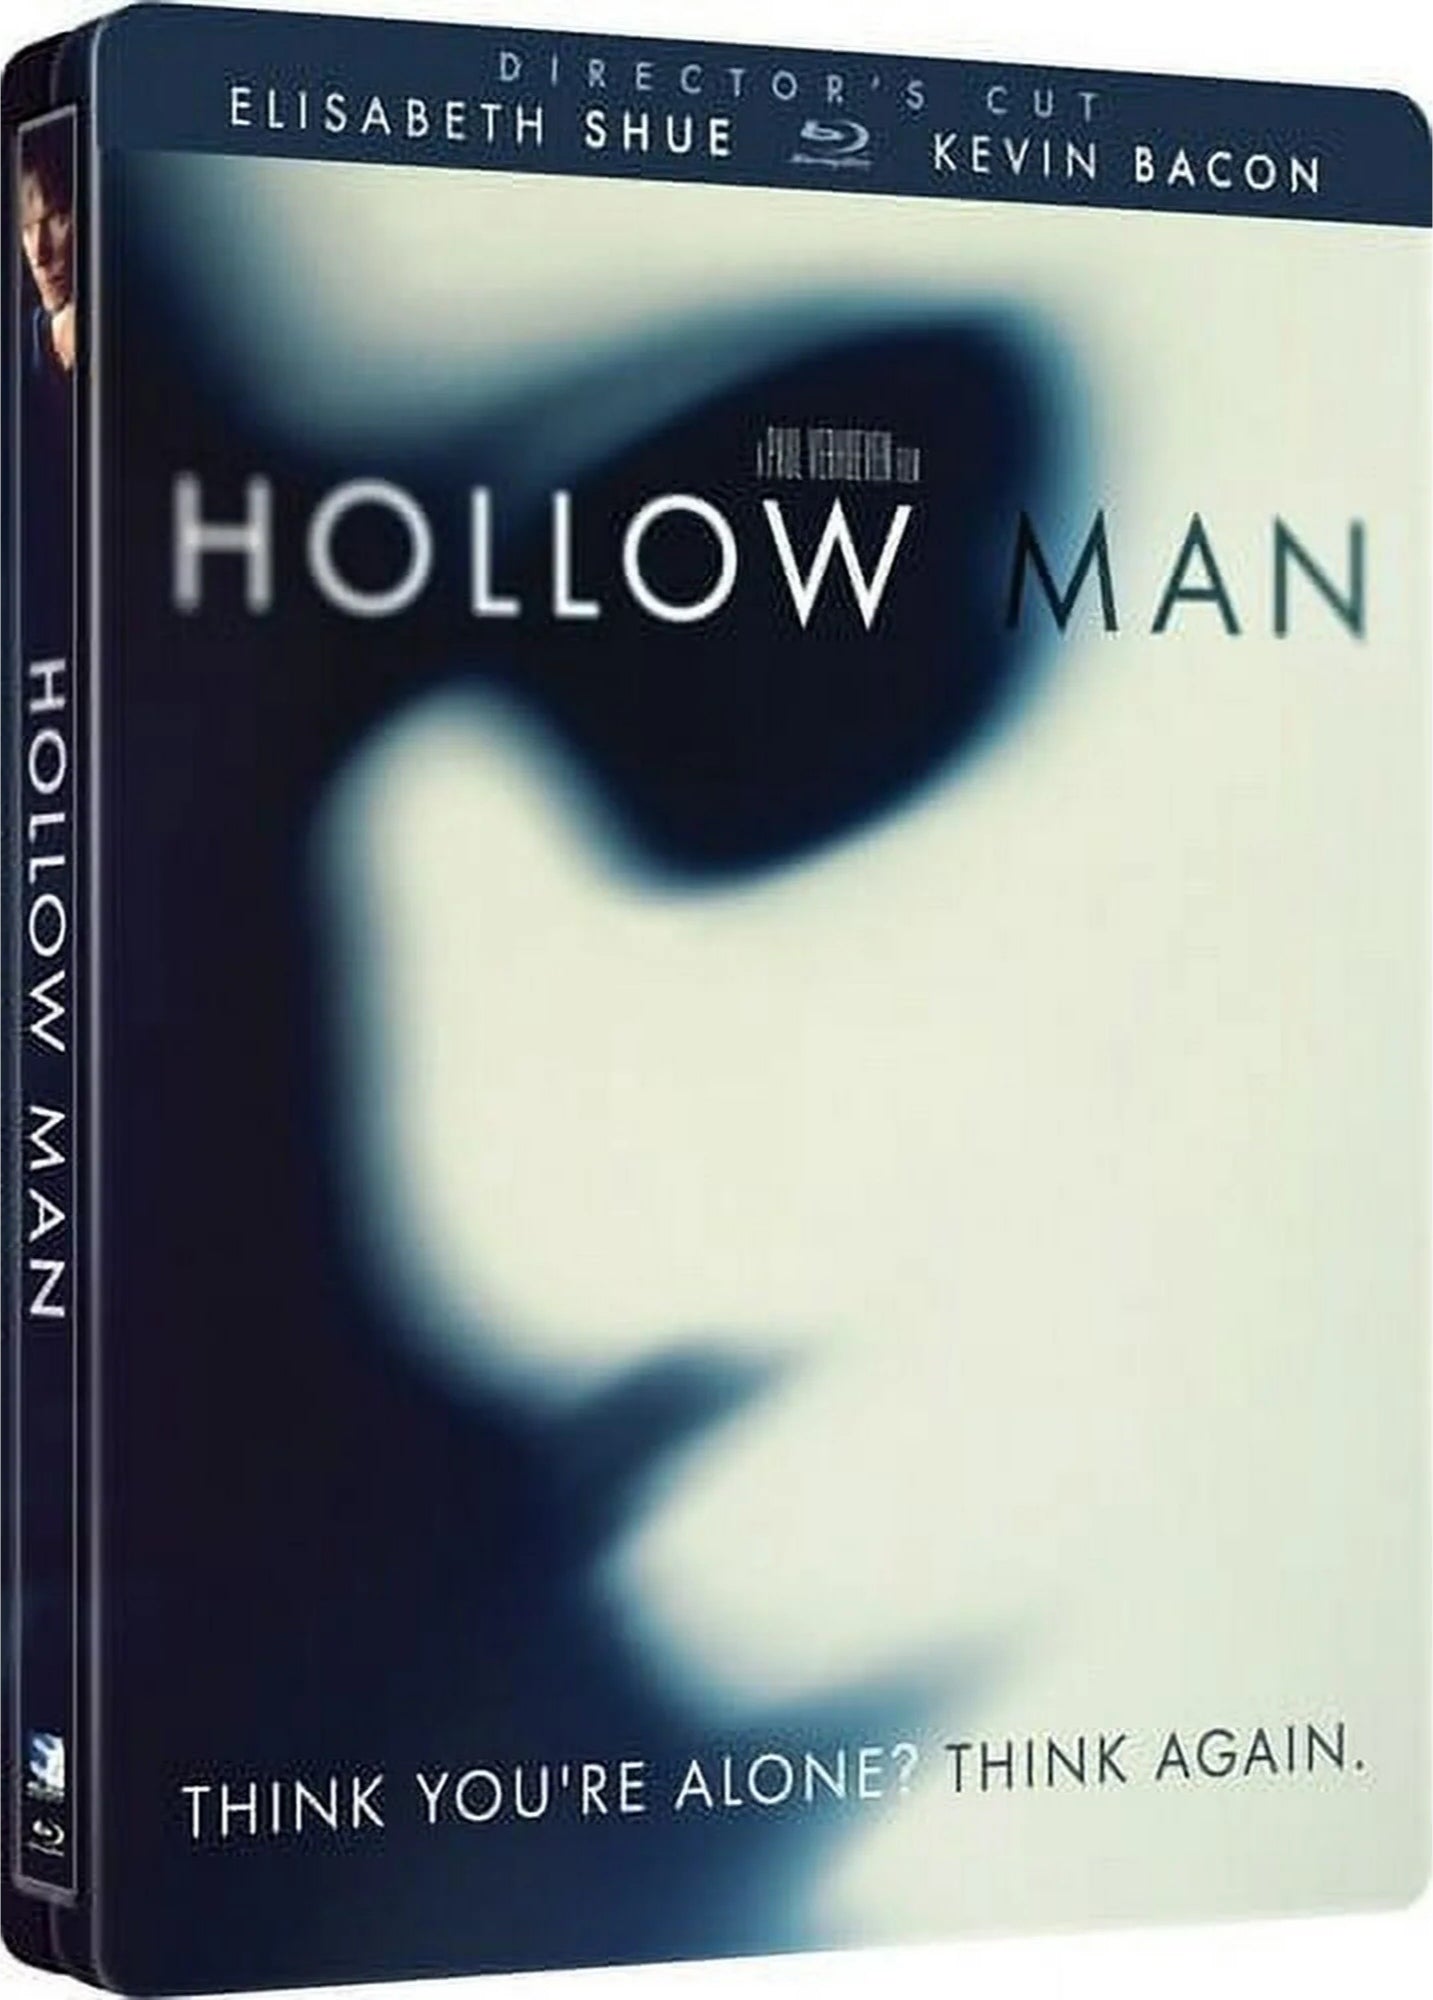 HOLLOW MAN (LIMITED EDITION) BLU-RAY STEELBOOK